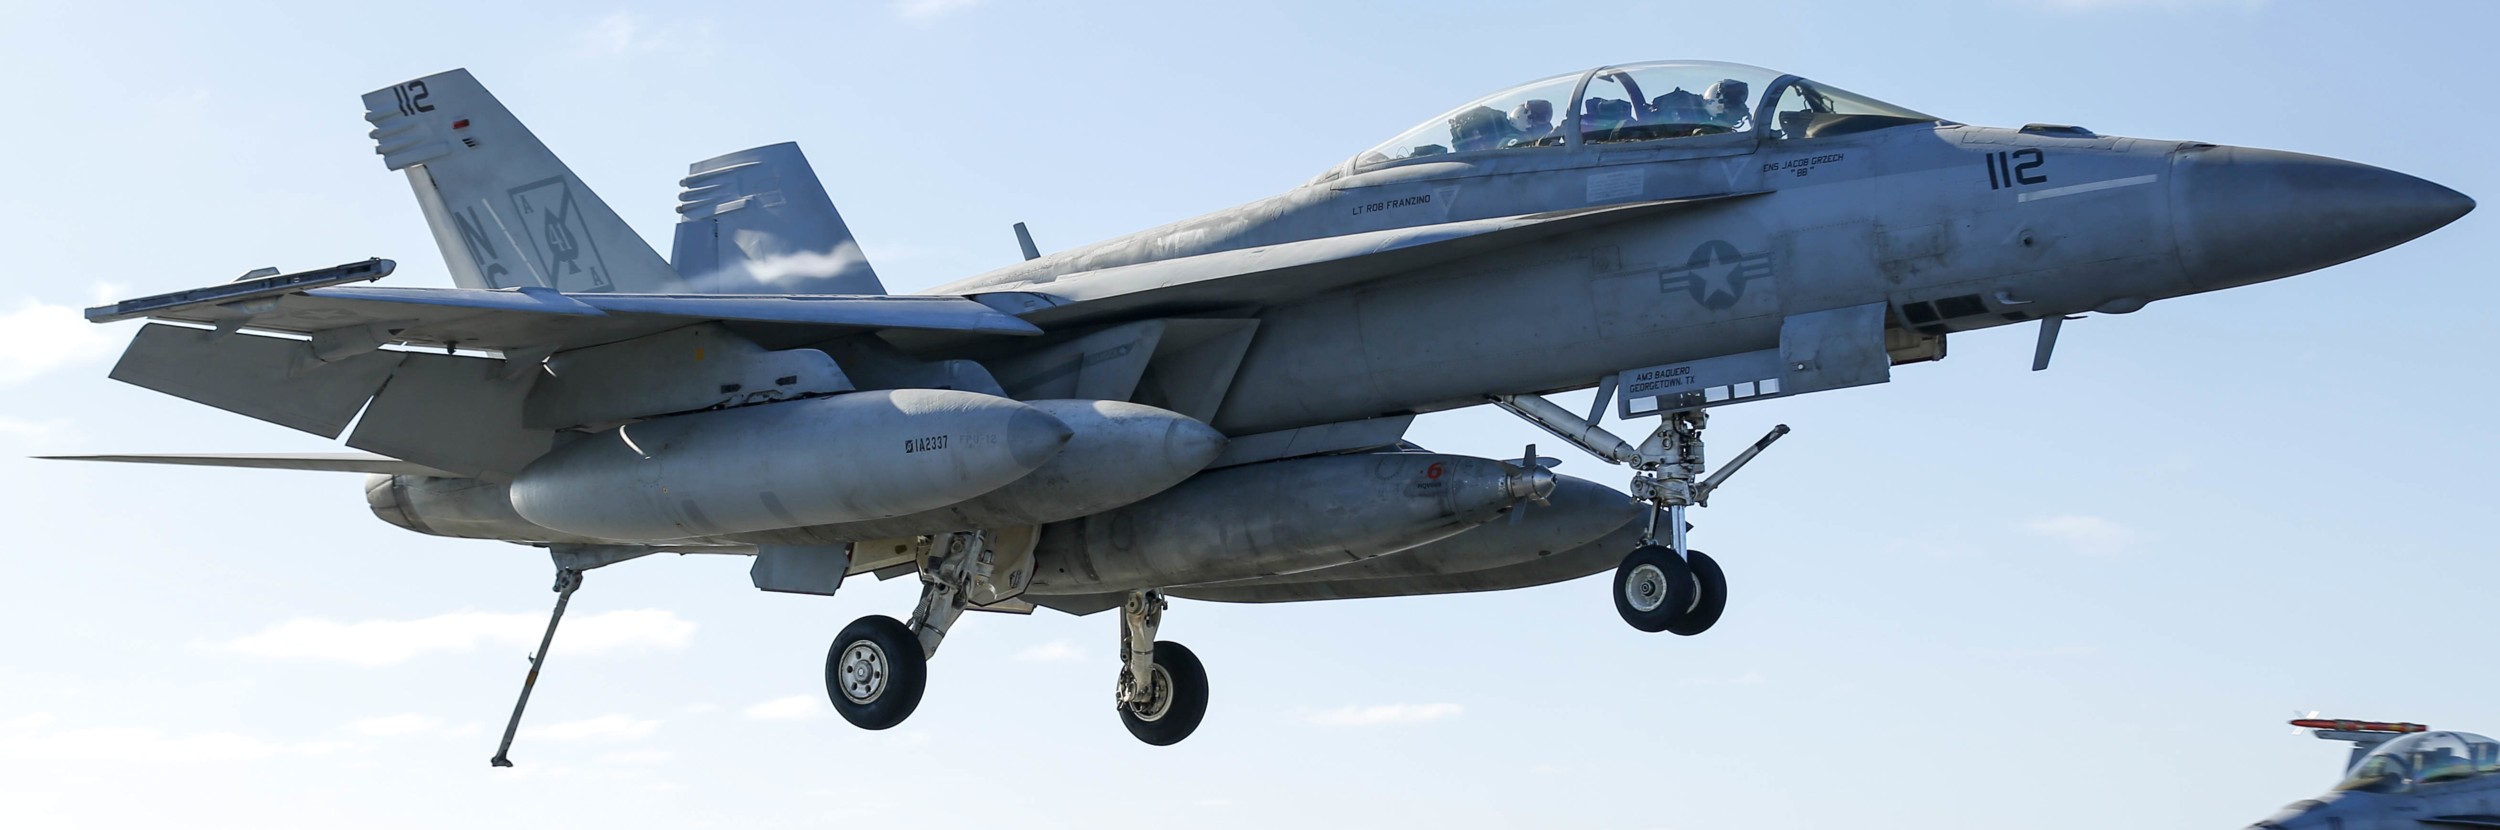 vfa-41 black aces strike fighter squadron f/a-18f super hornet cvw-9 cvn-72 uss abraham lincoln us navy 69